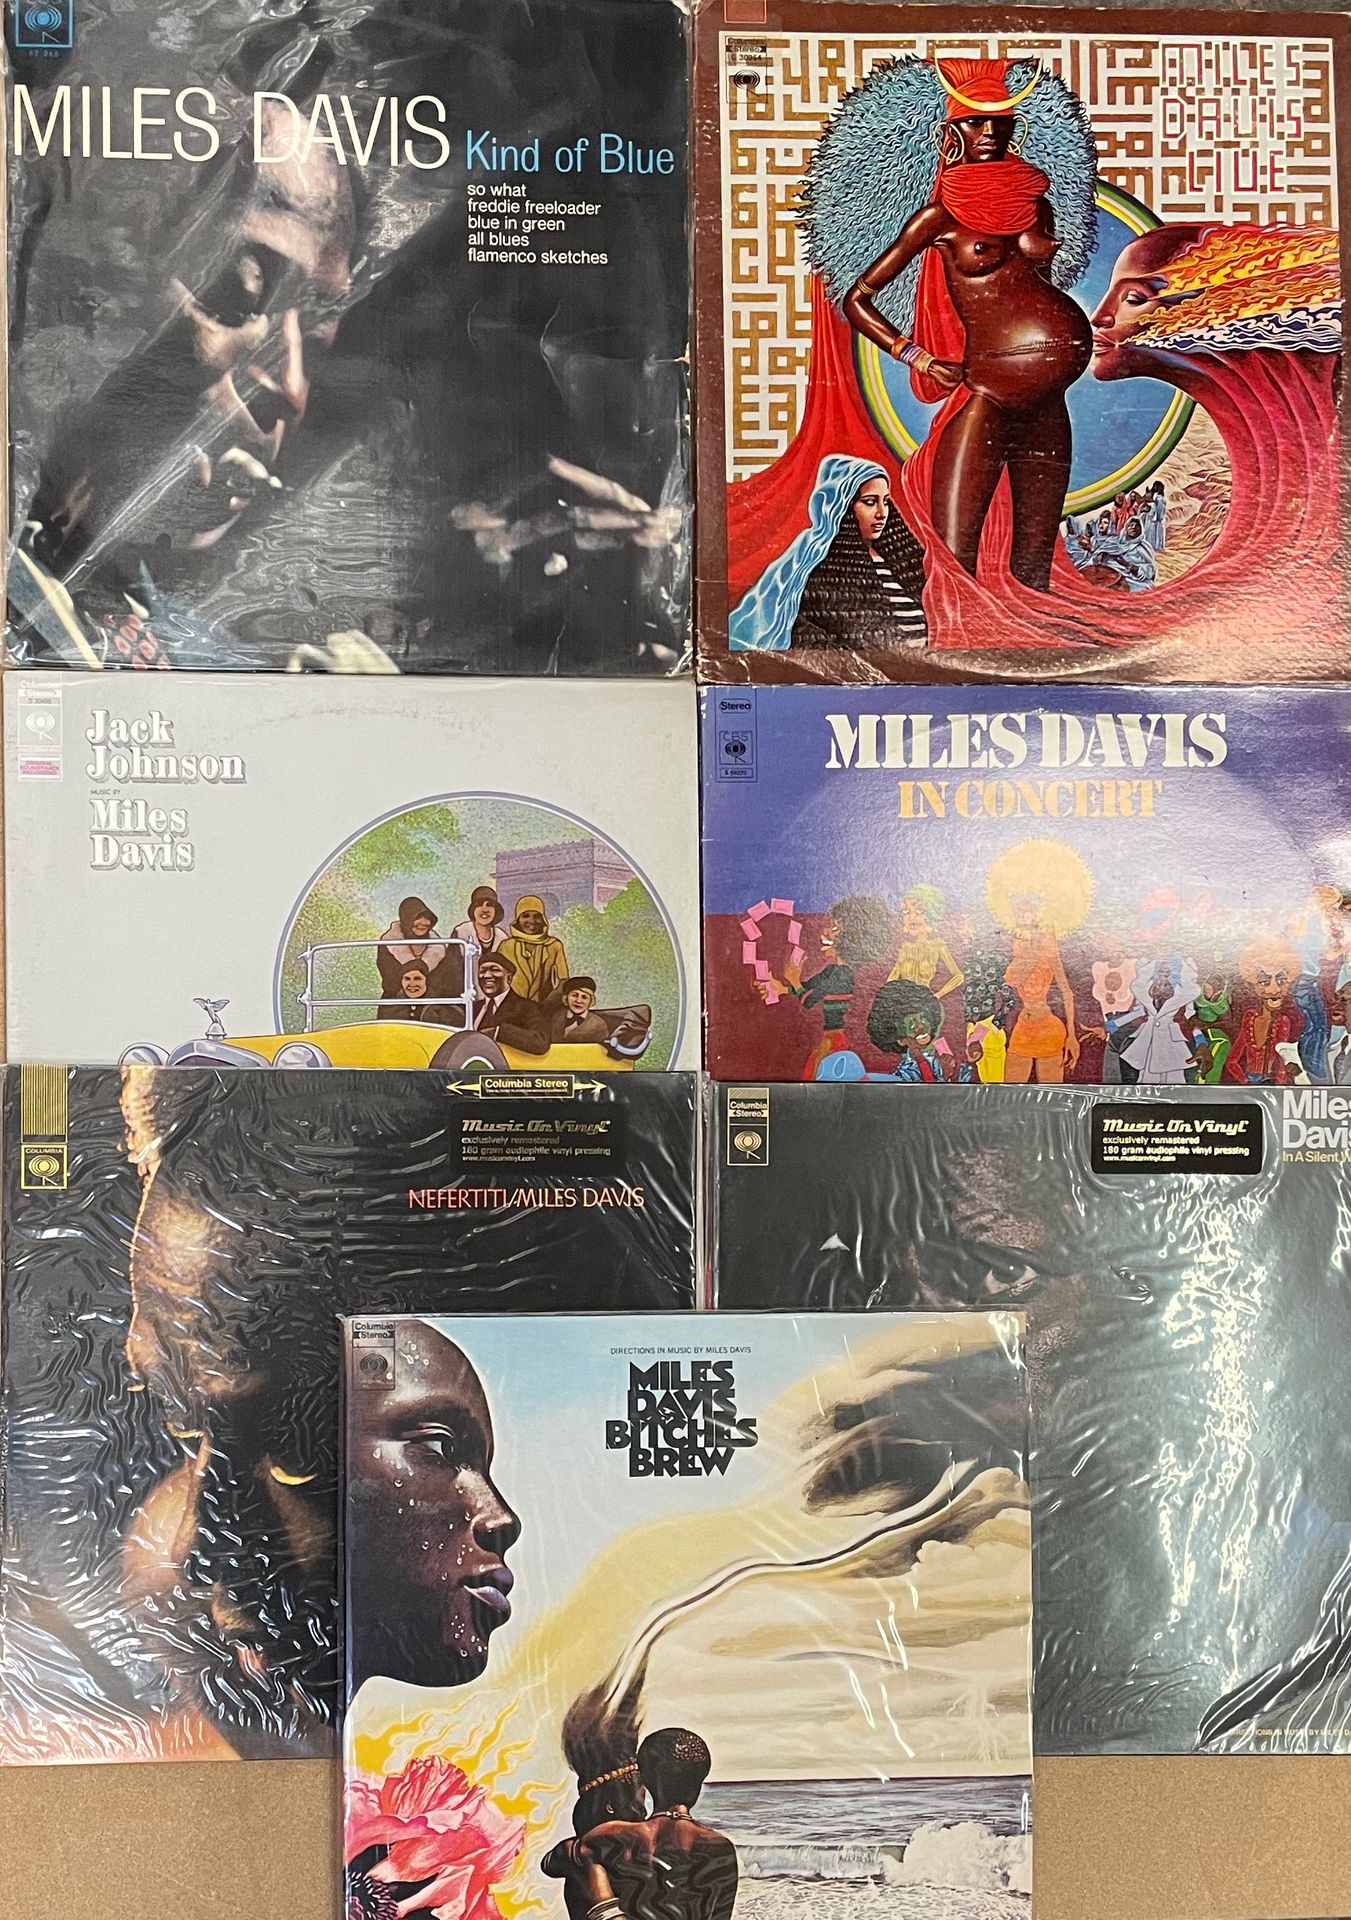 Null 七张唱片 - Miles Davis

四个美国或法国原版压片

三个180克的发烧级压片

VG至NM；VG至NM